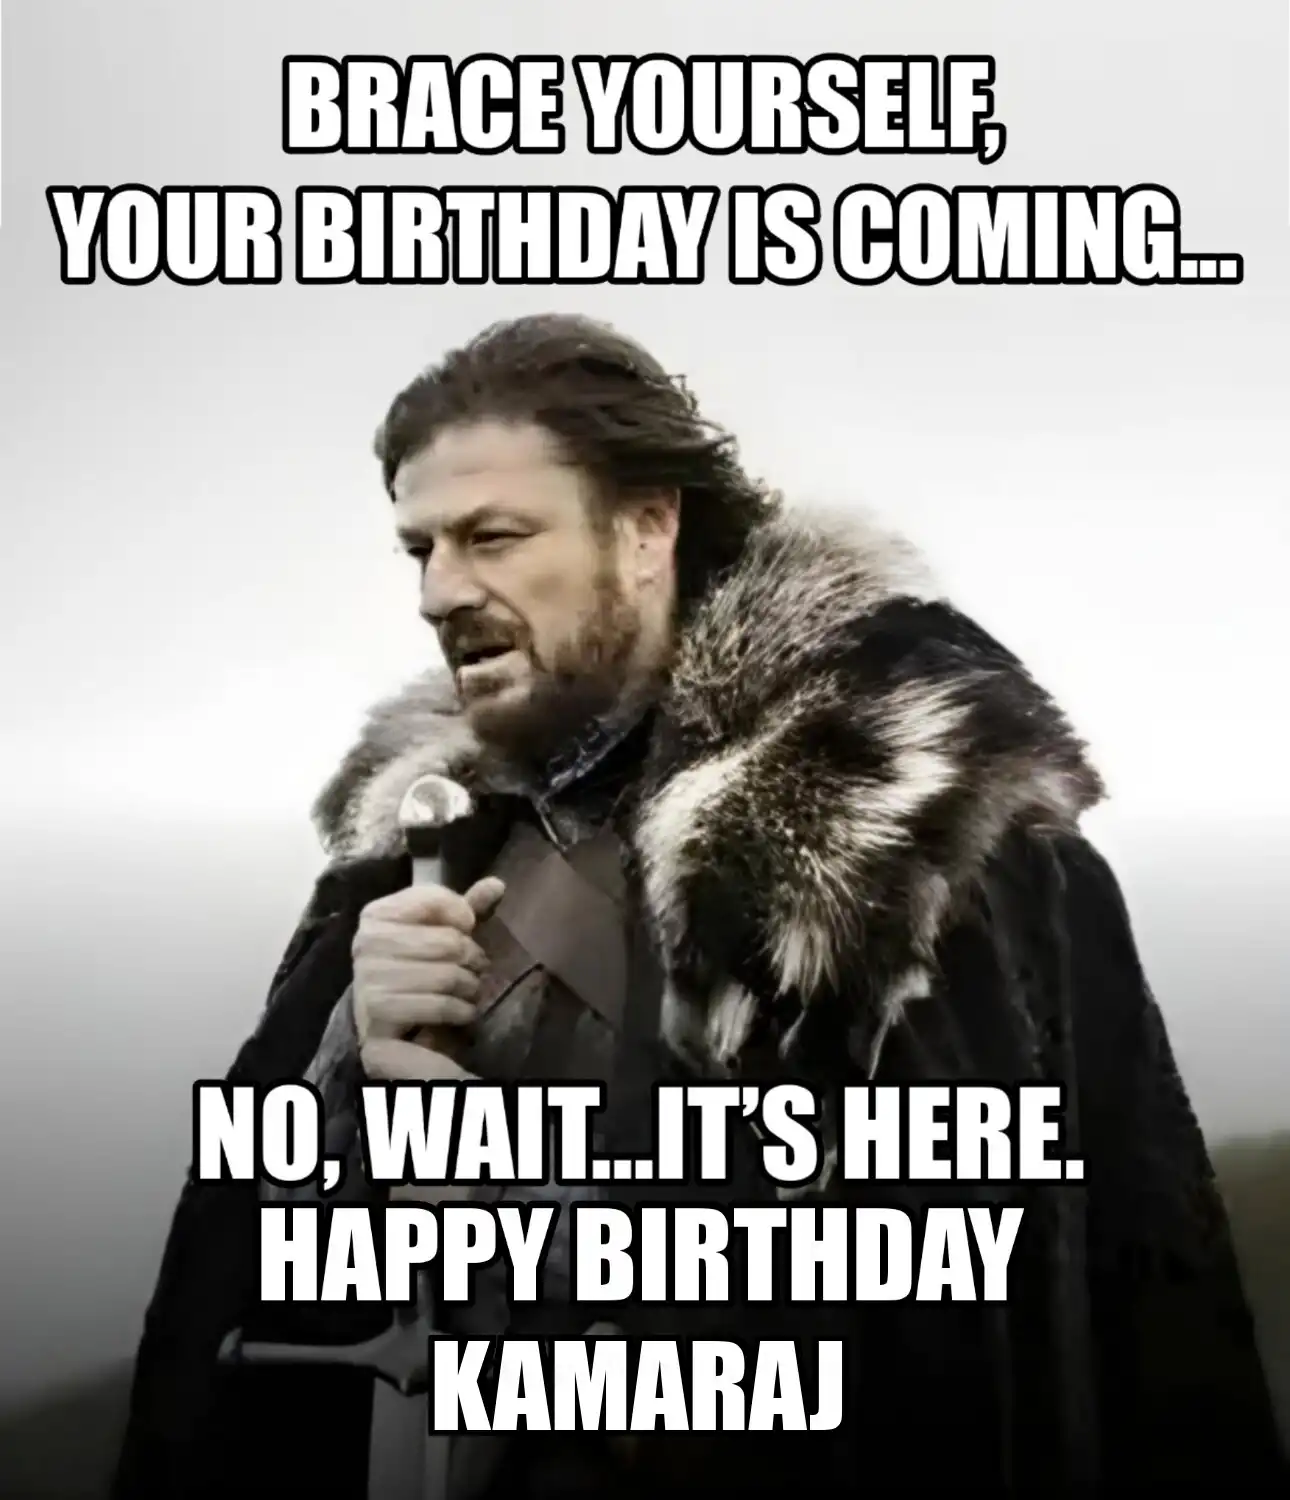 Happy Birthday Kamaraj Brace Yourself Your Birthday Is Coming Meme